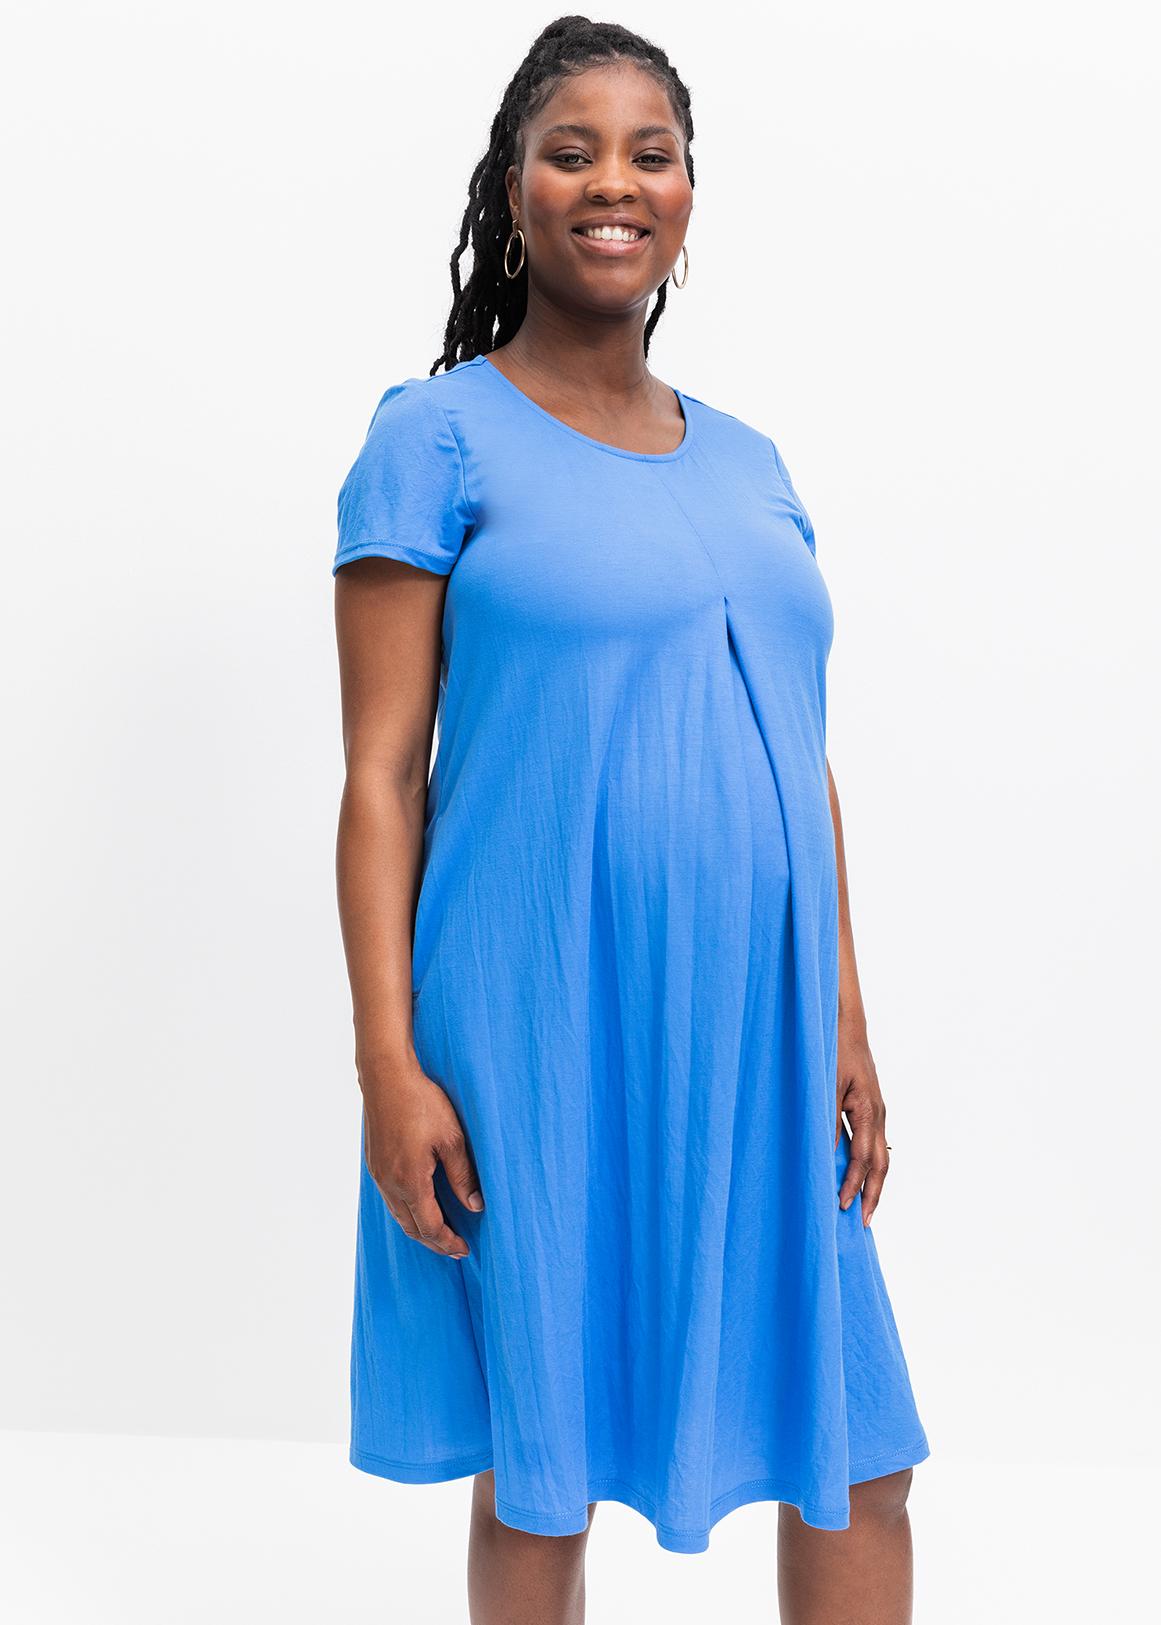 Women's Maternity Tops V-Neck Front Pleat Tunic Pregnancy Shirts